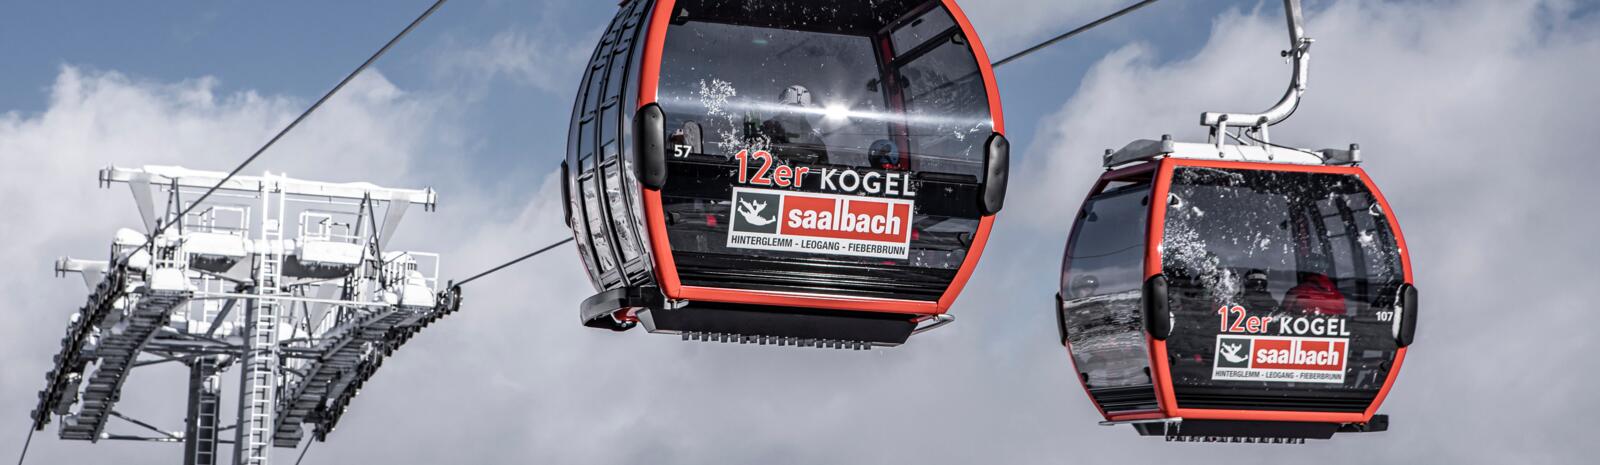 Gondel der 12er-Kogelbahn im Skicircus Saalbach Hinterglemm | © Christian Wöckinger